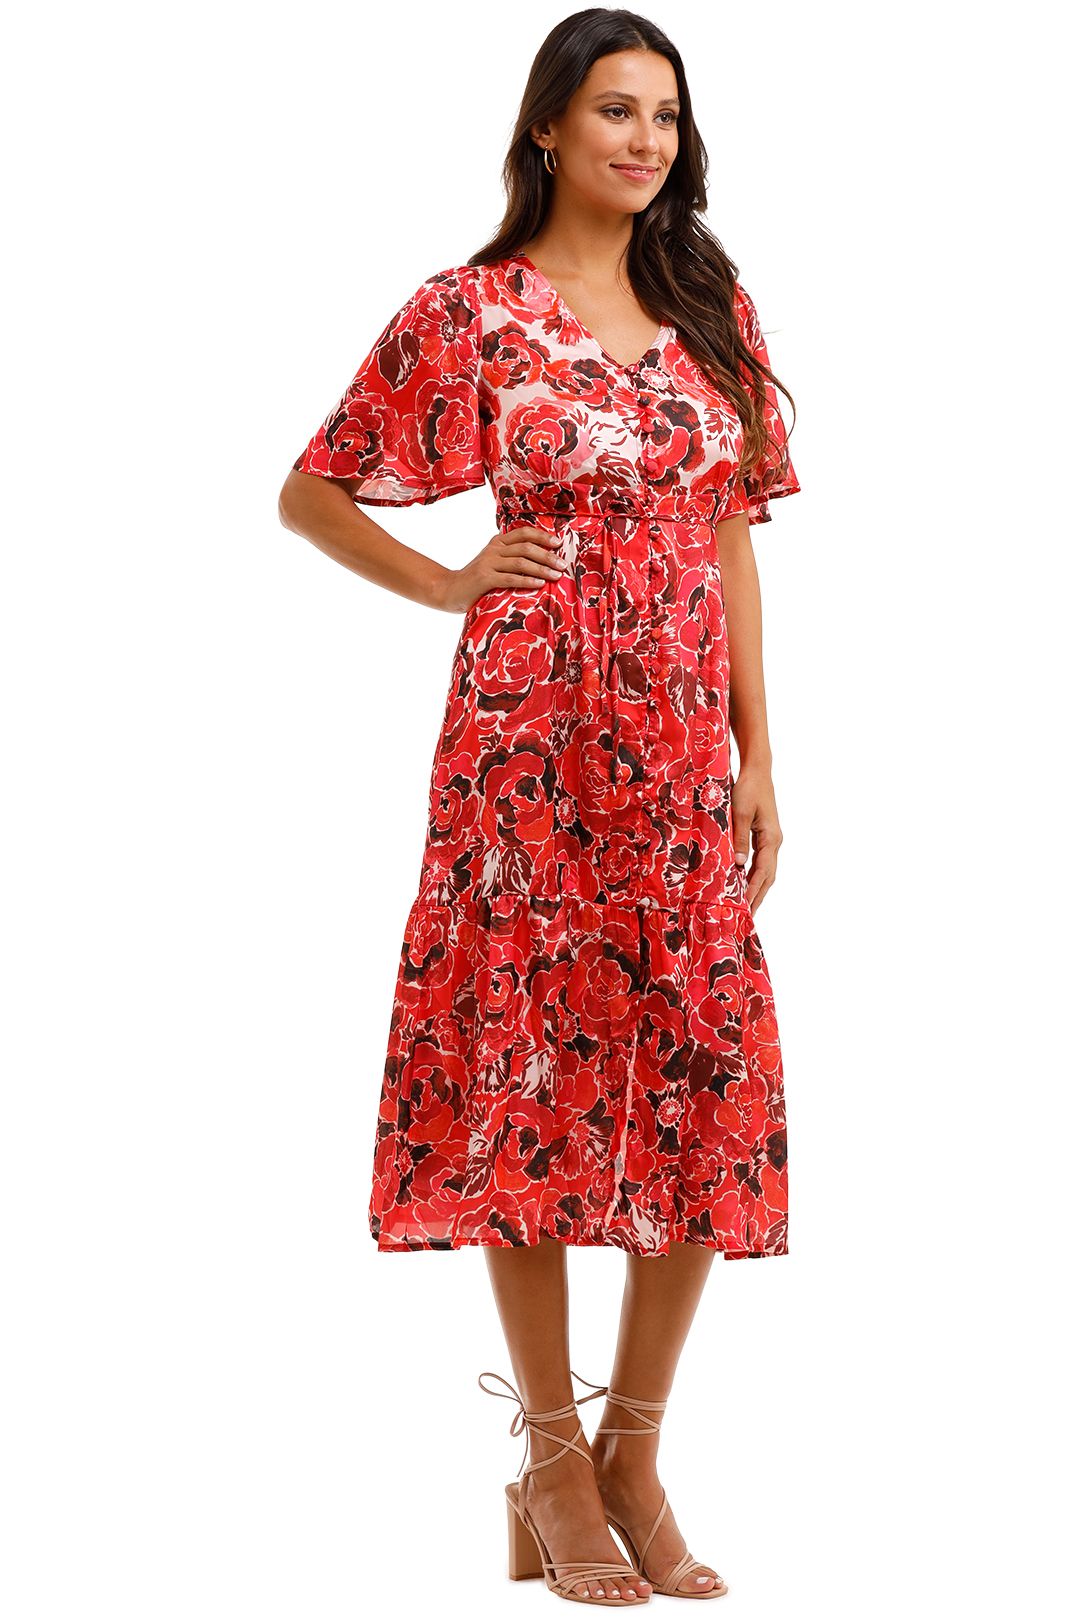 MNG Flowy Printed Dress Midi Red Floral